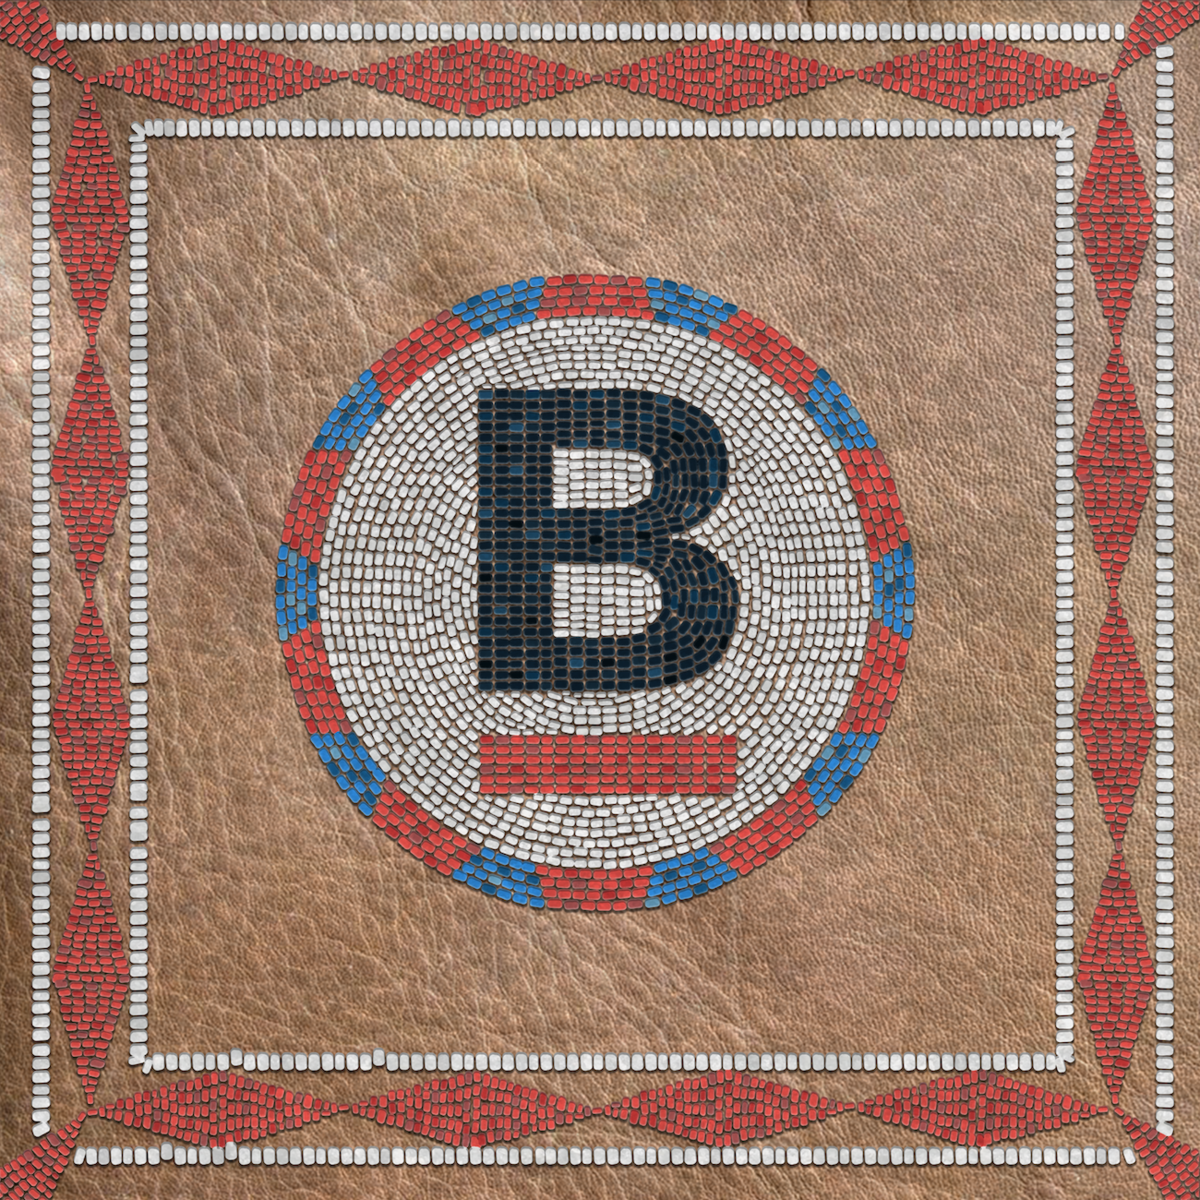 Native American Heritage Month Boston "B"